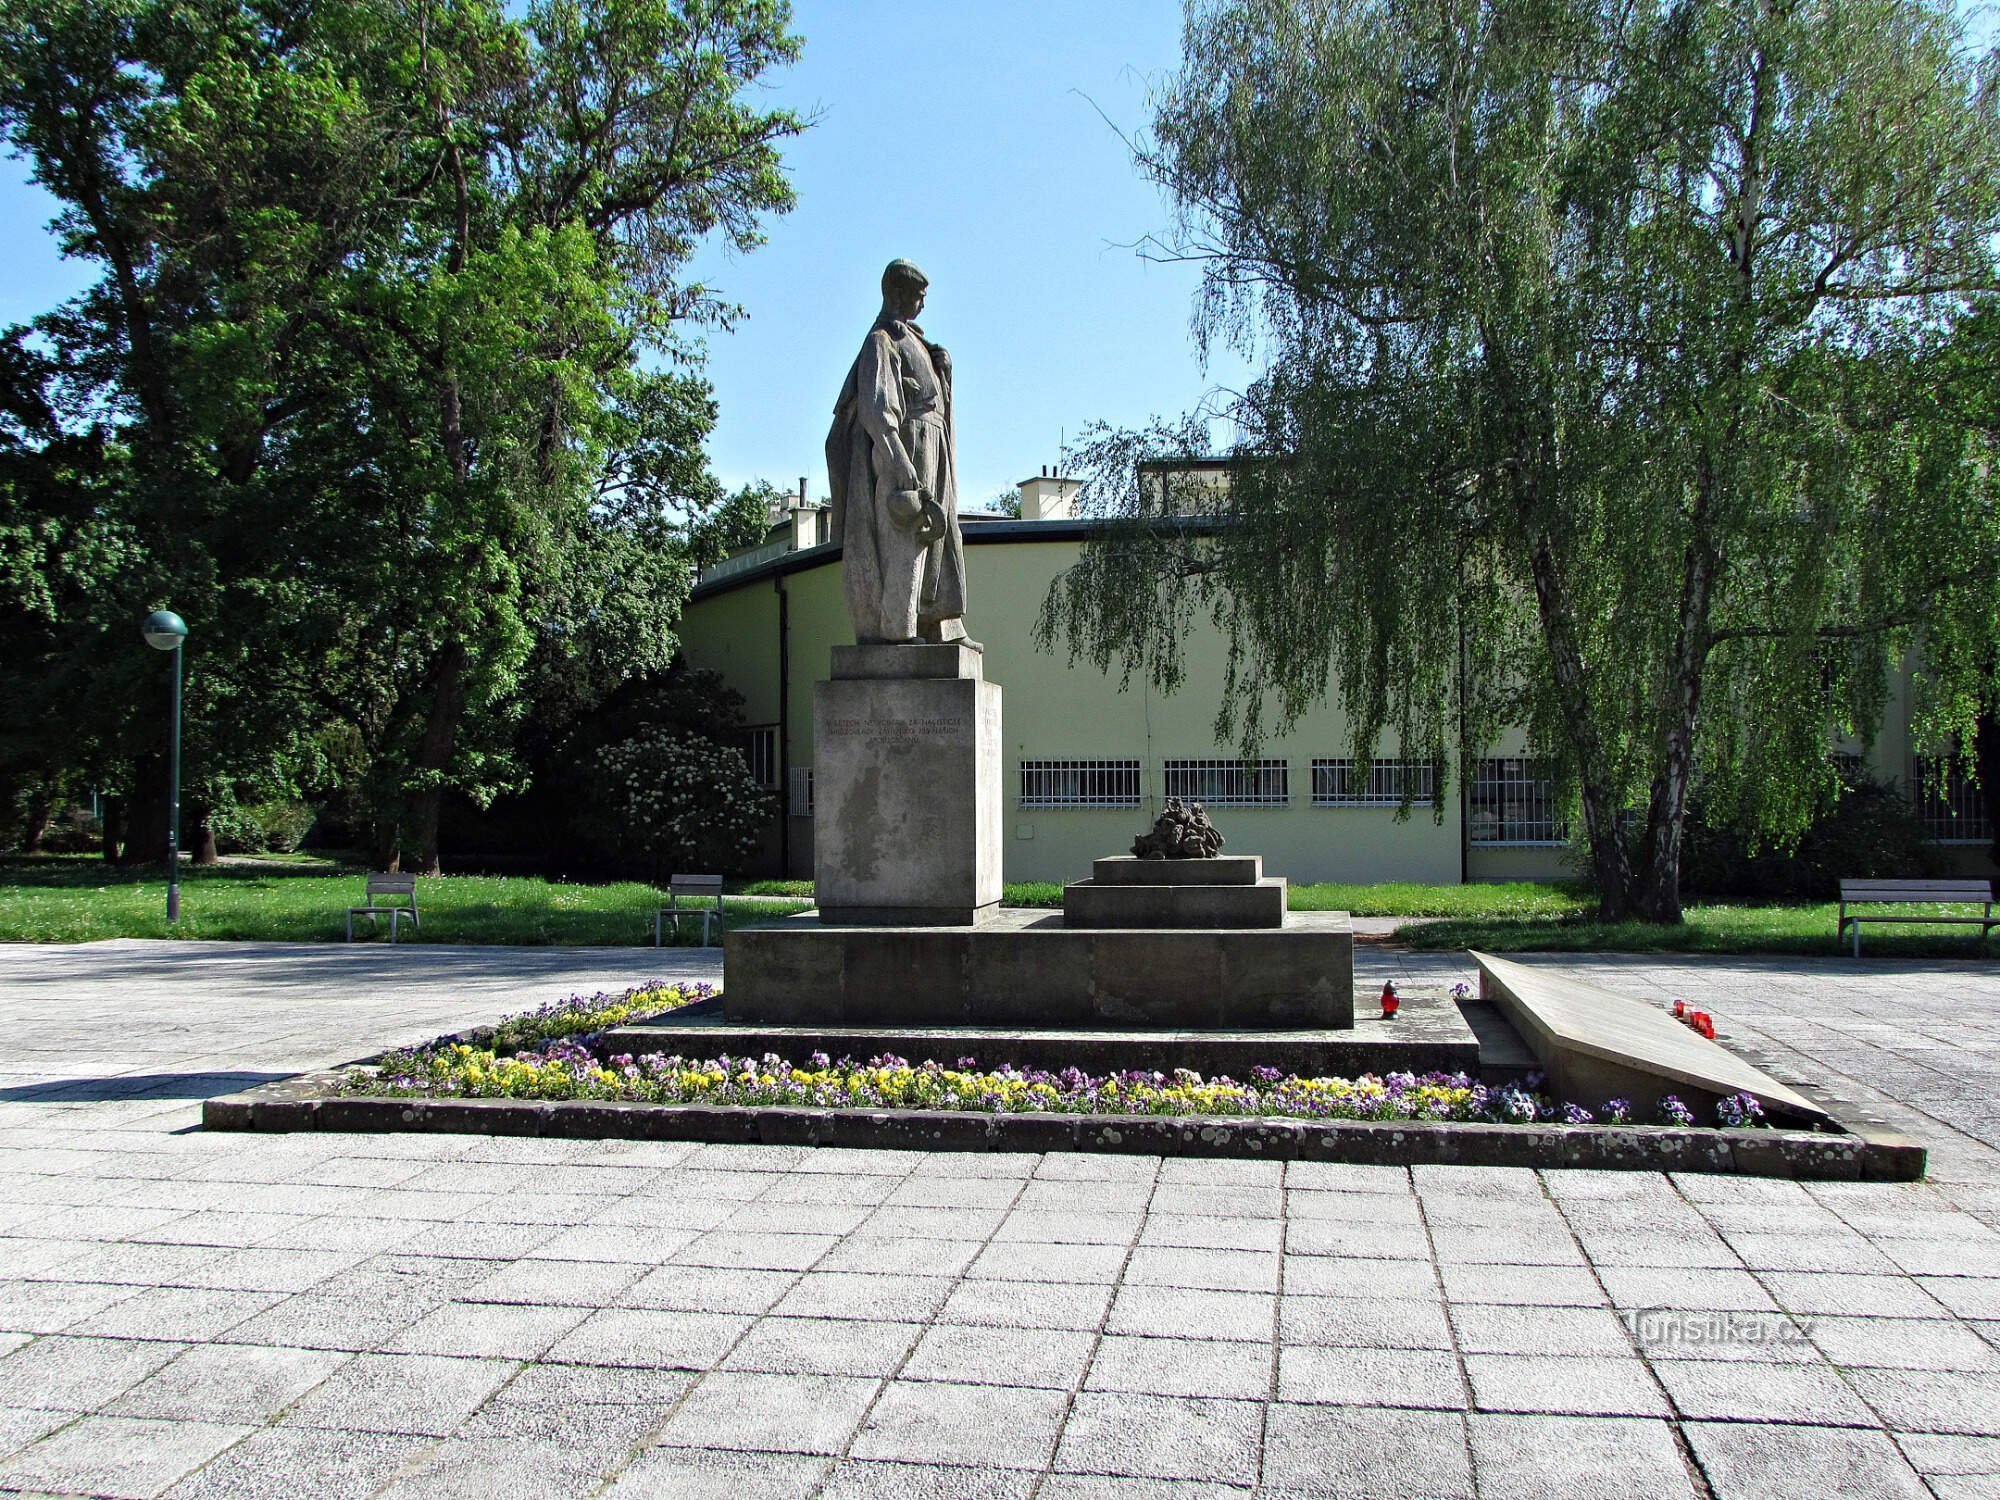 Uherskohradiště Monument to the victims of World War II